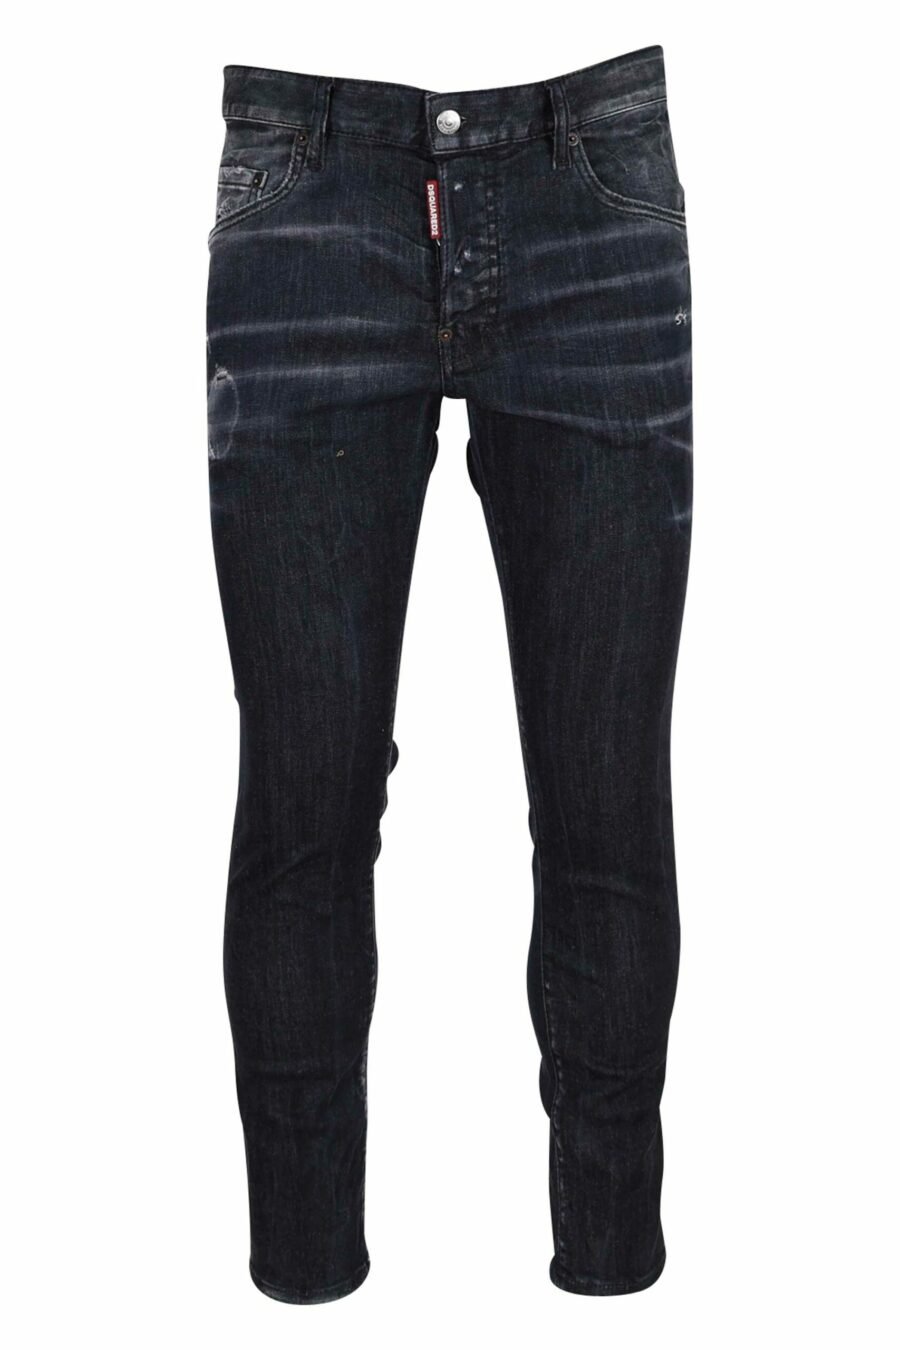 Schwarze, halb getragene "Skater-Jeans" - 8054148289591 skaliert